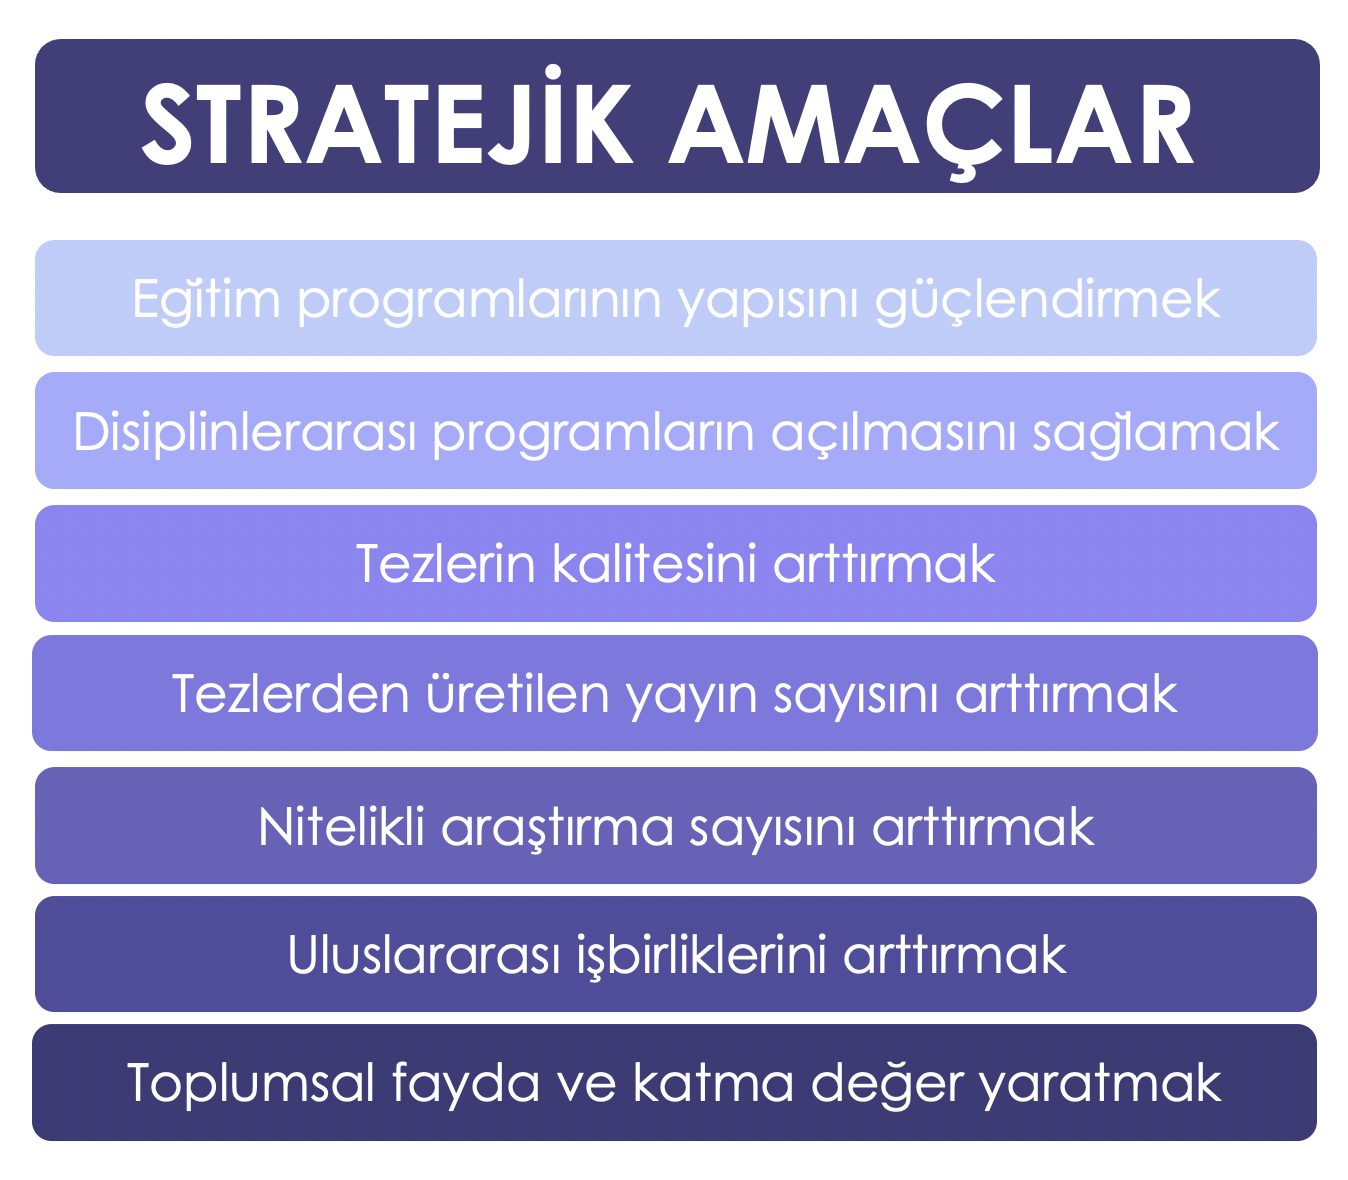 stratejik amaçlar 3.png (560 KB)